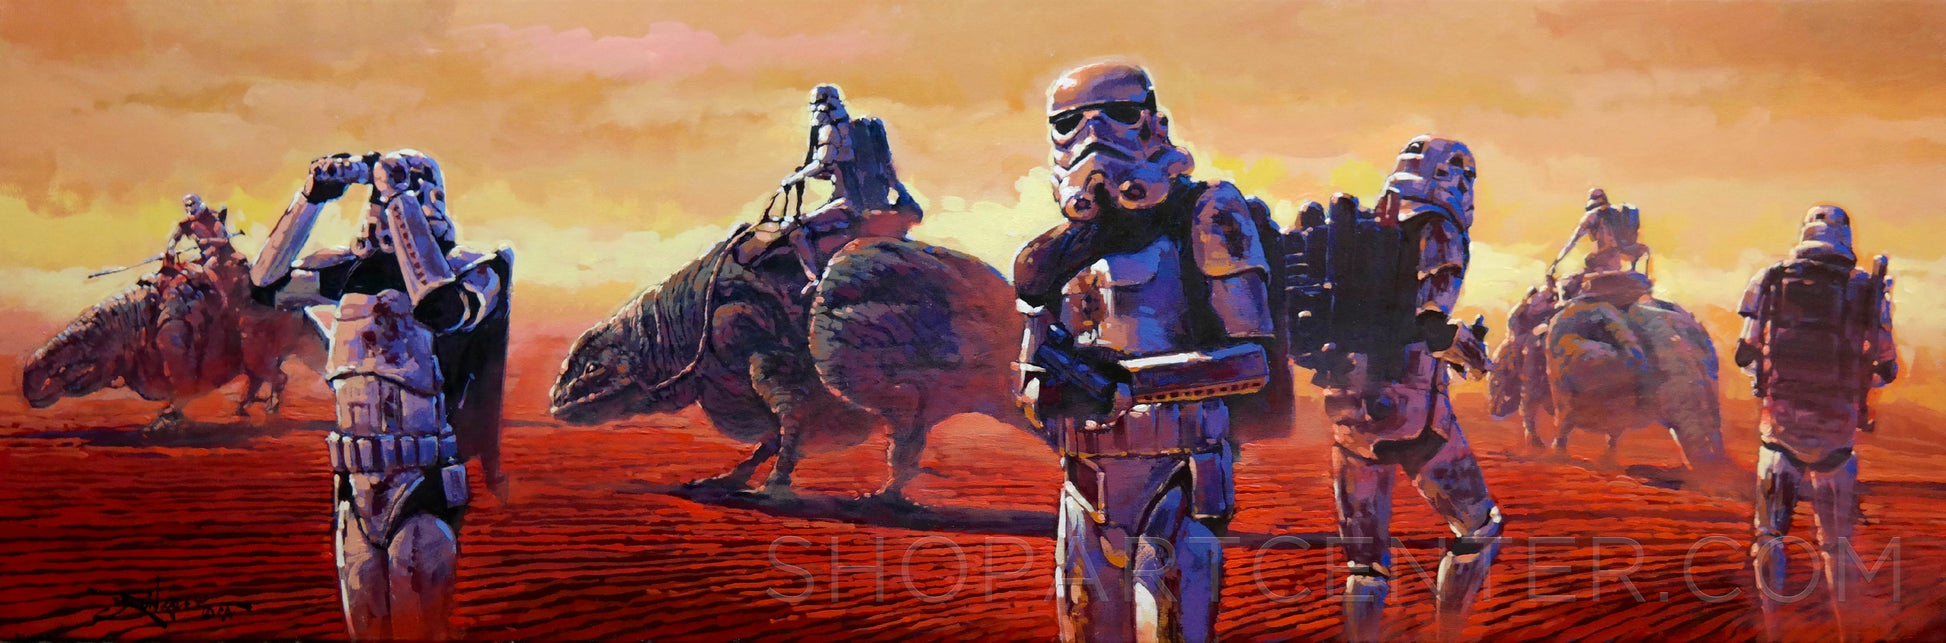 Rodel Gonzalez Star Wars "Sand Trooper" Limited Edition Canvas Giclee